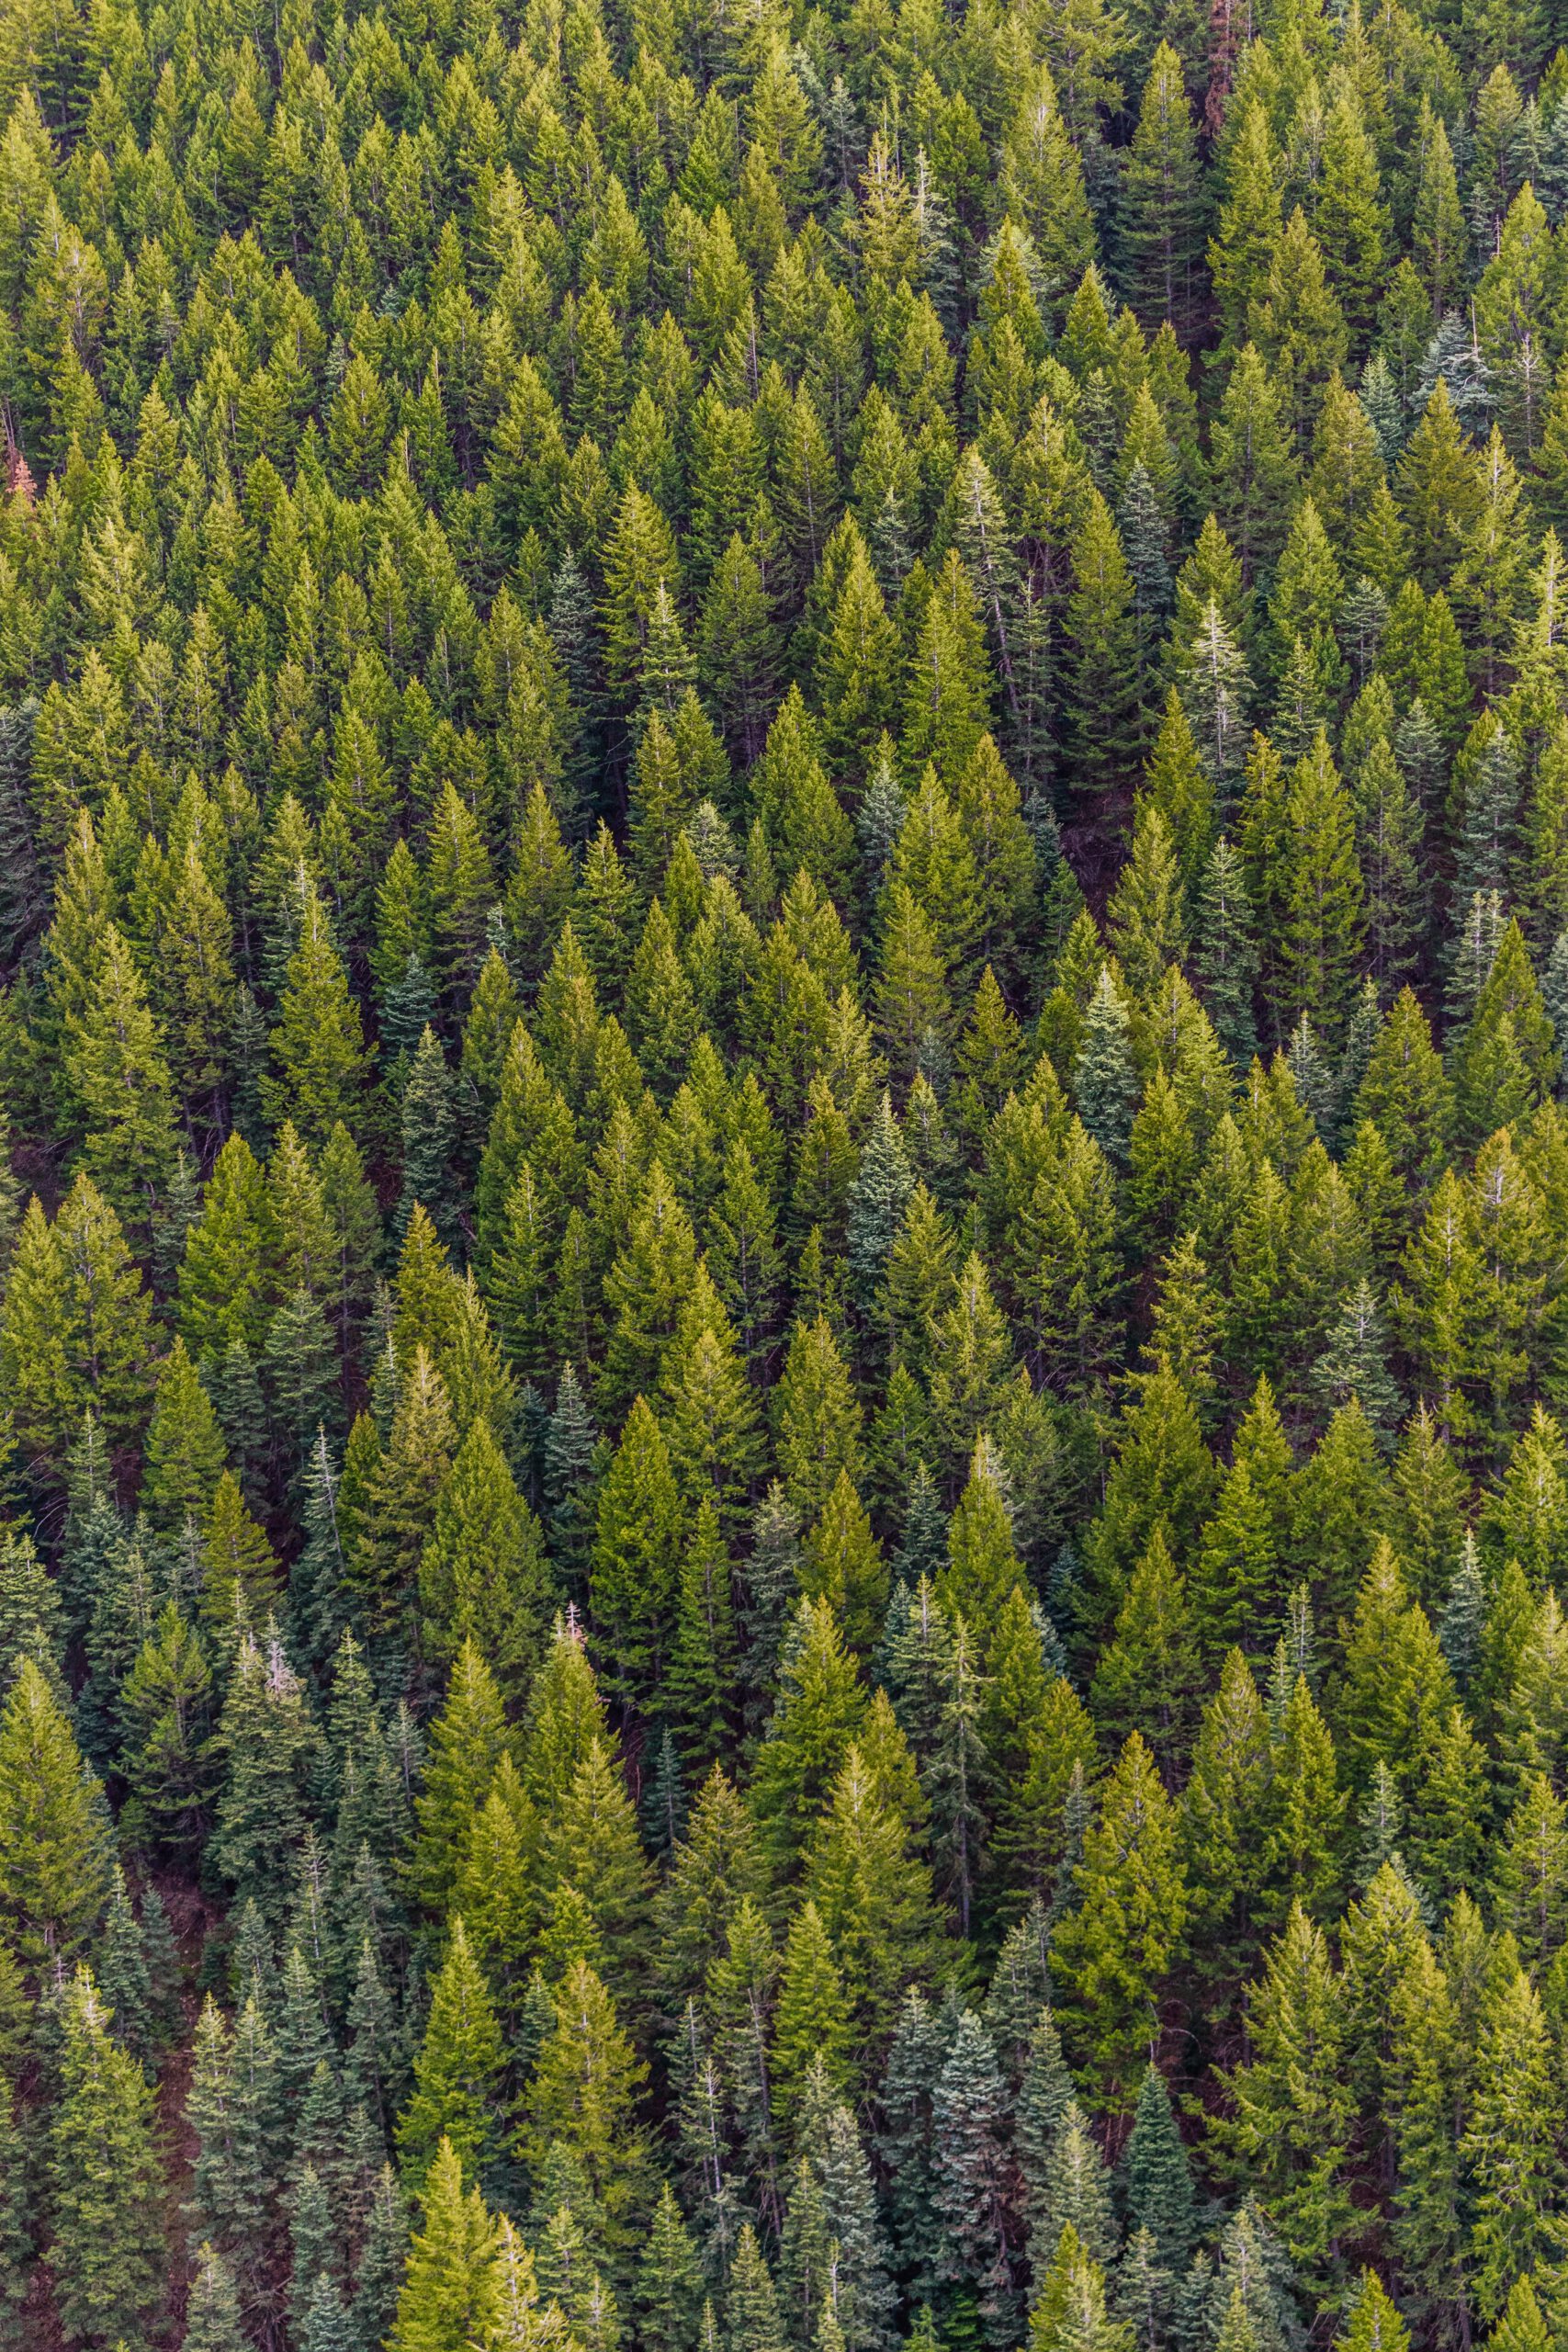 Photo by Matthew Montrone: https://www.pexels.com/photo/green-pine-trees-1179229/